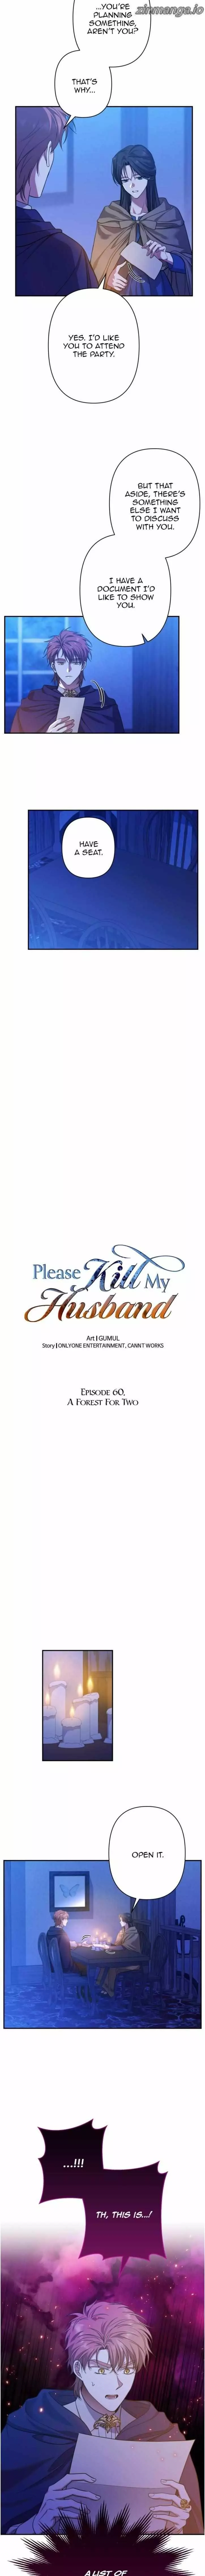 Kill My Husband - 60 page 5-6e1e4db5